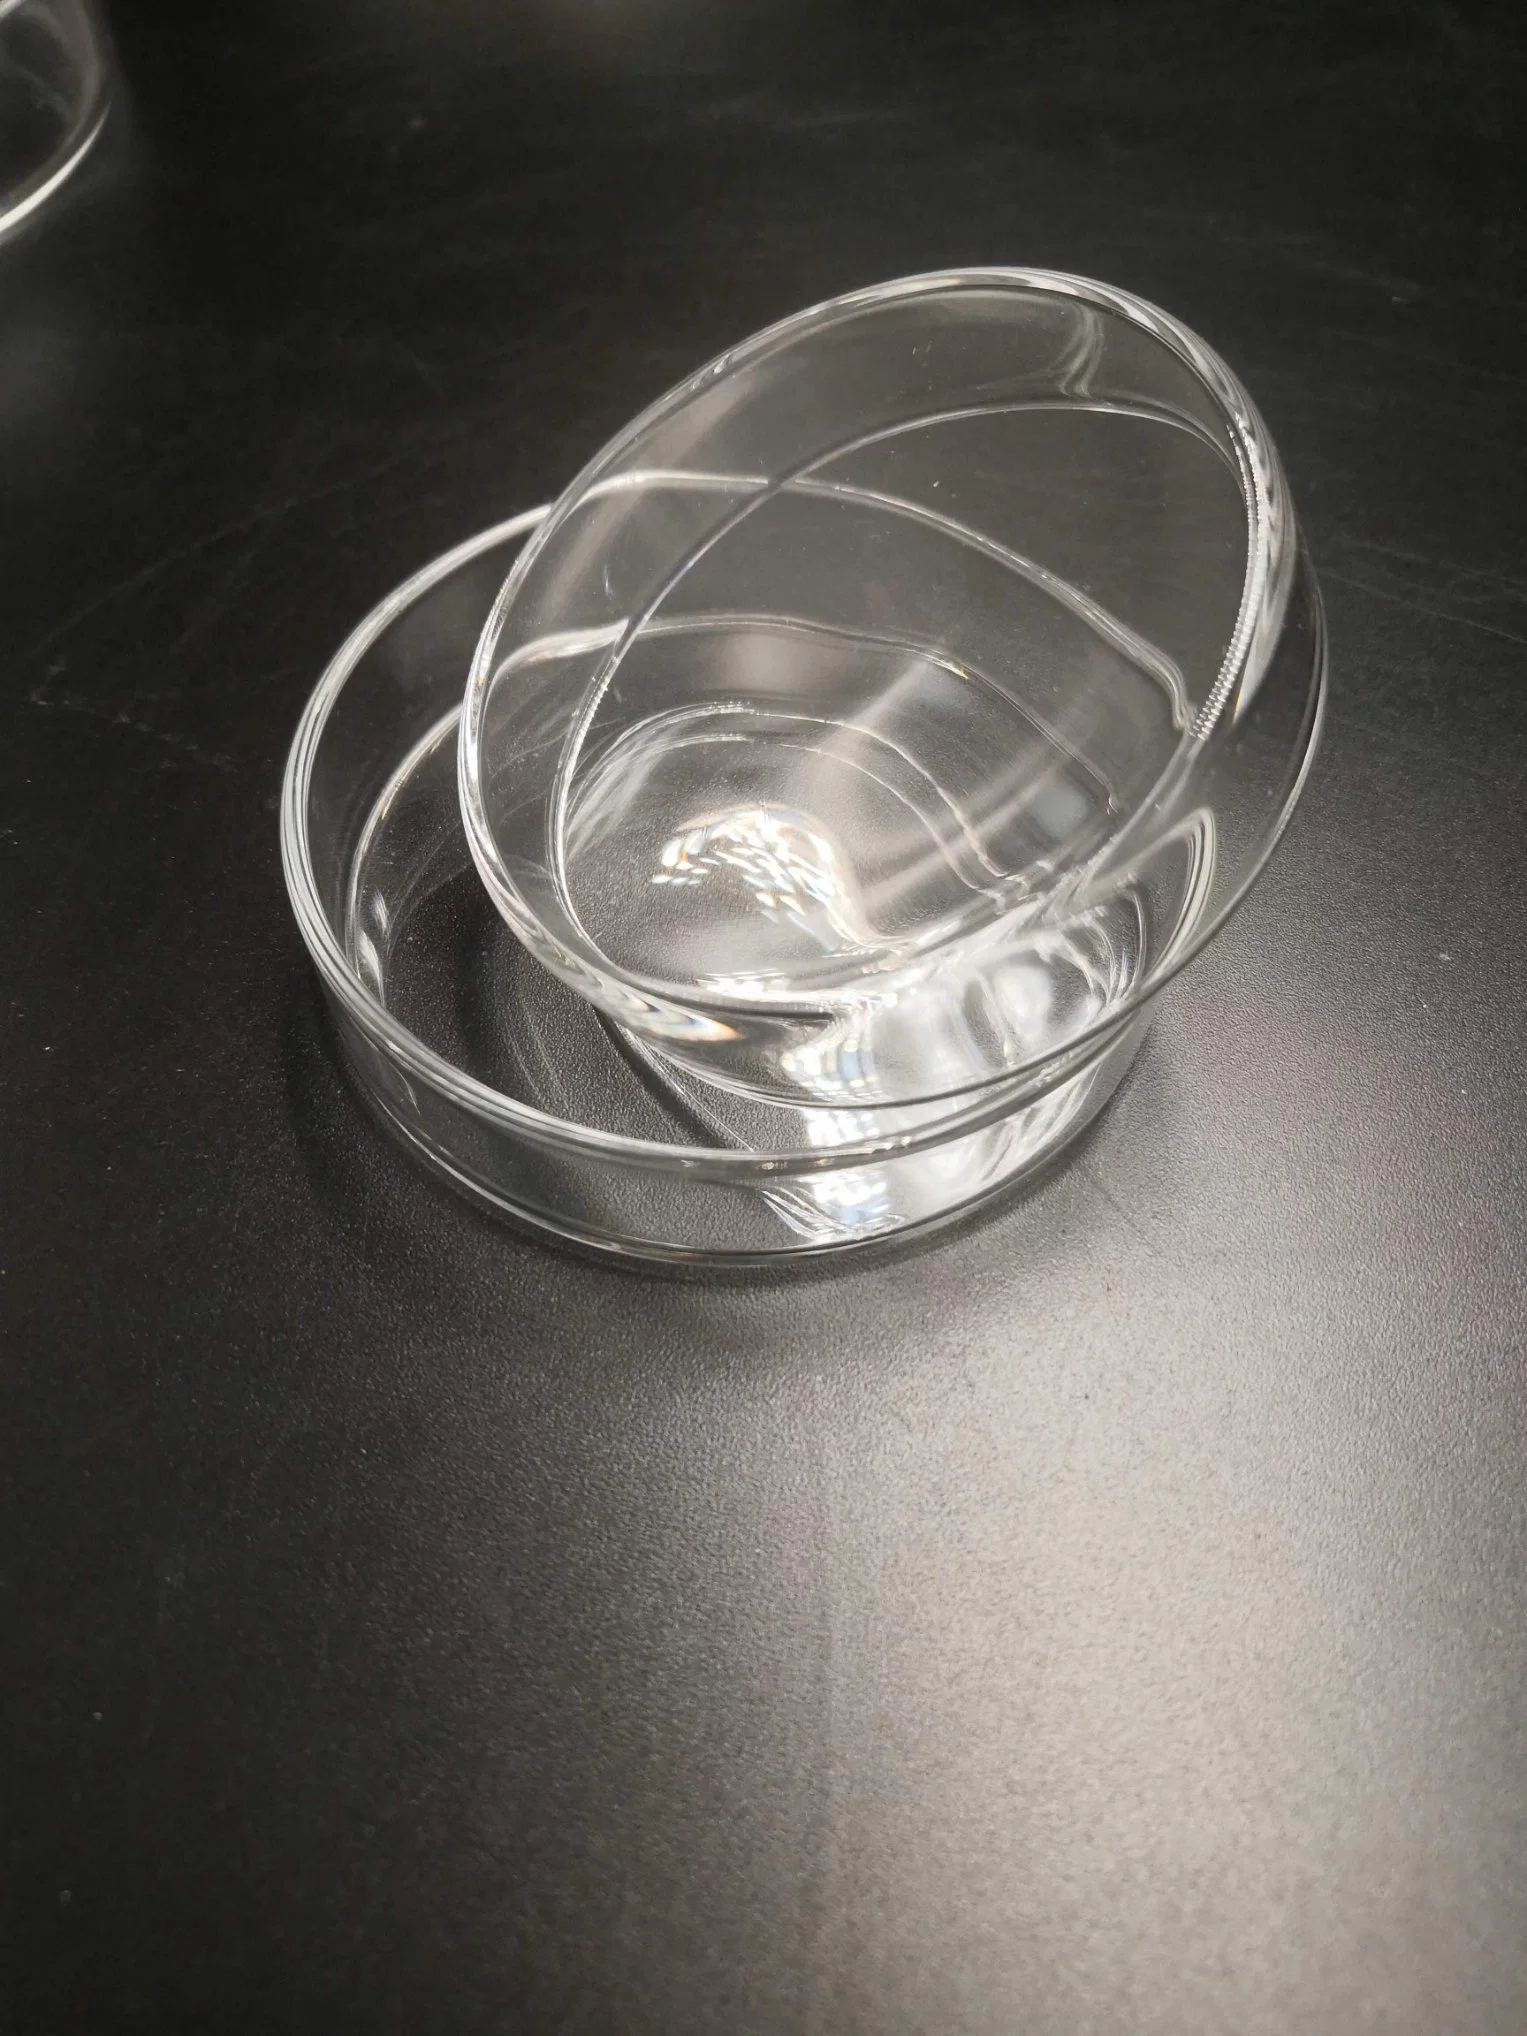 Cristalería placas Petri de laboratorio de vidrio de borosilicato de 90 mm con tapa